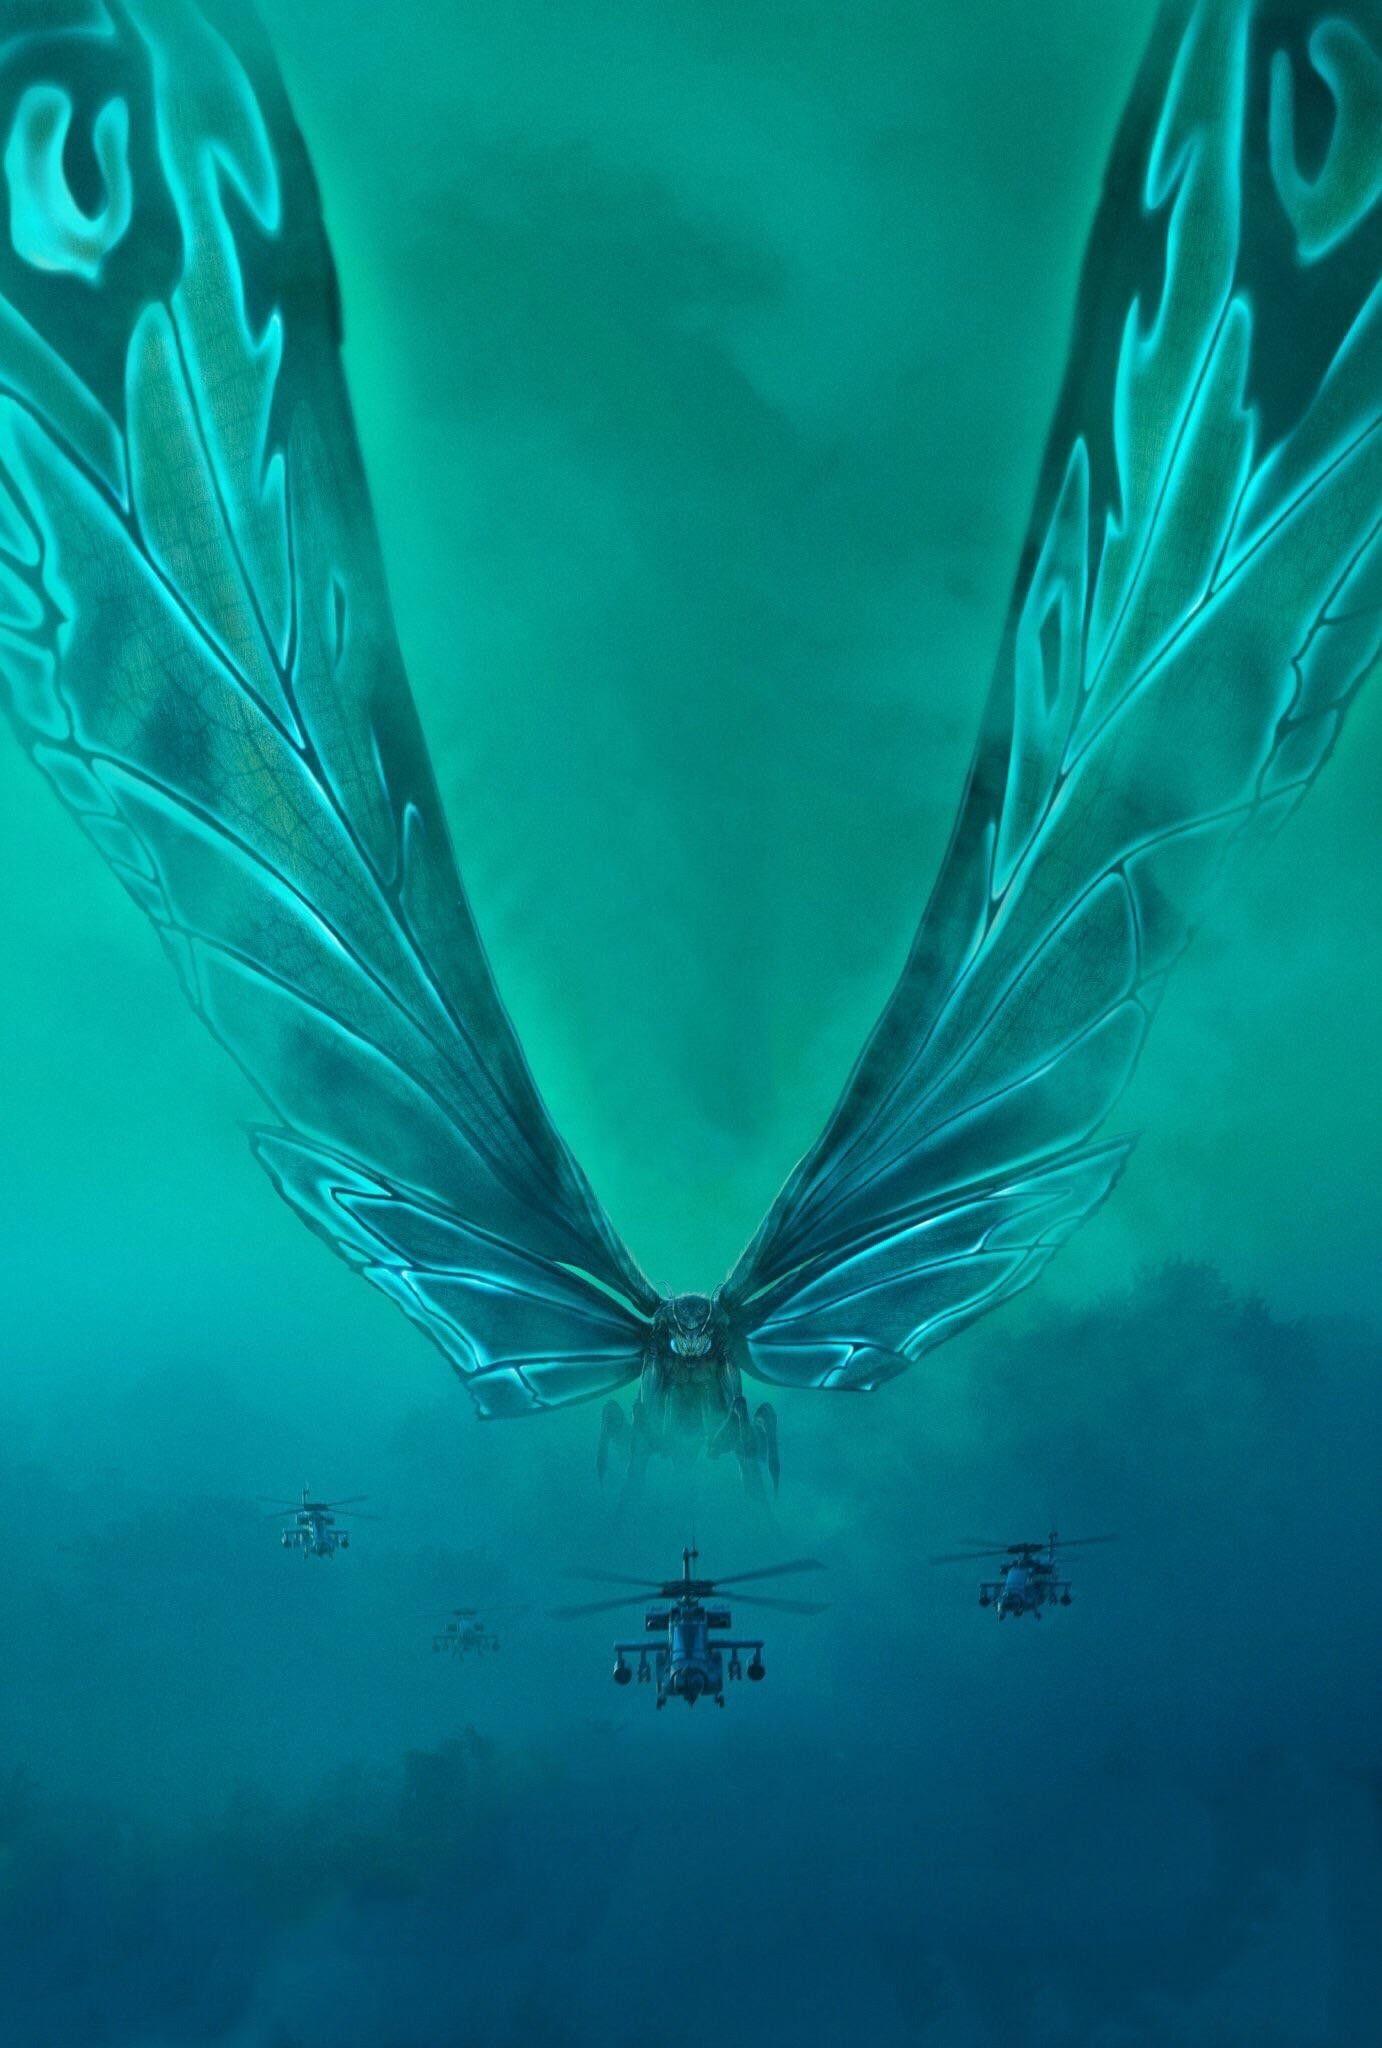 Official Mothra 2019 Poster Textless. Godzilla, Kaiju monsters